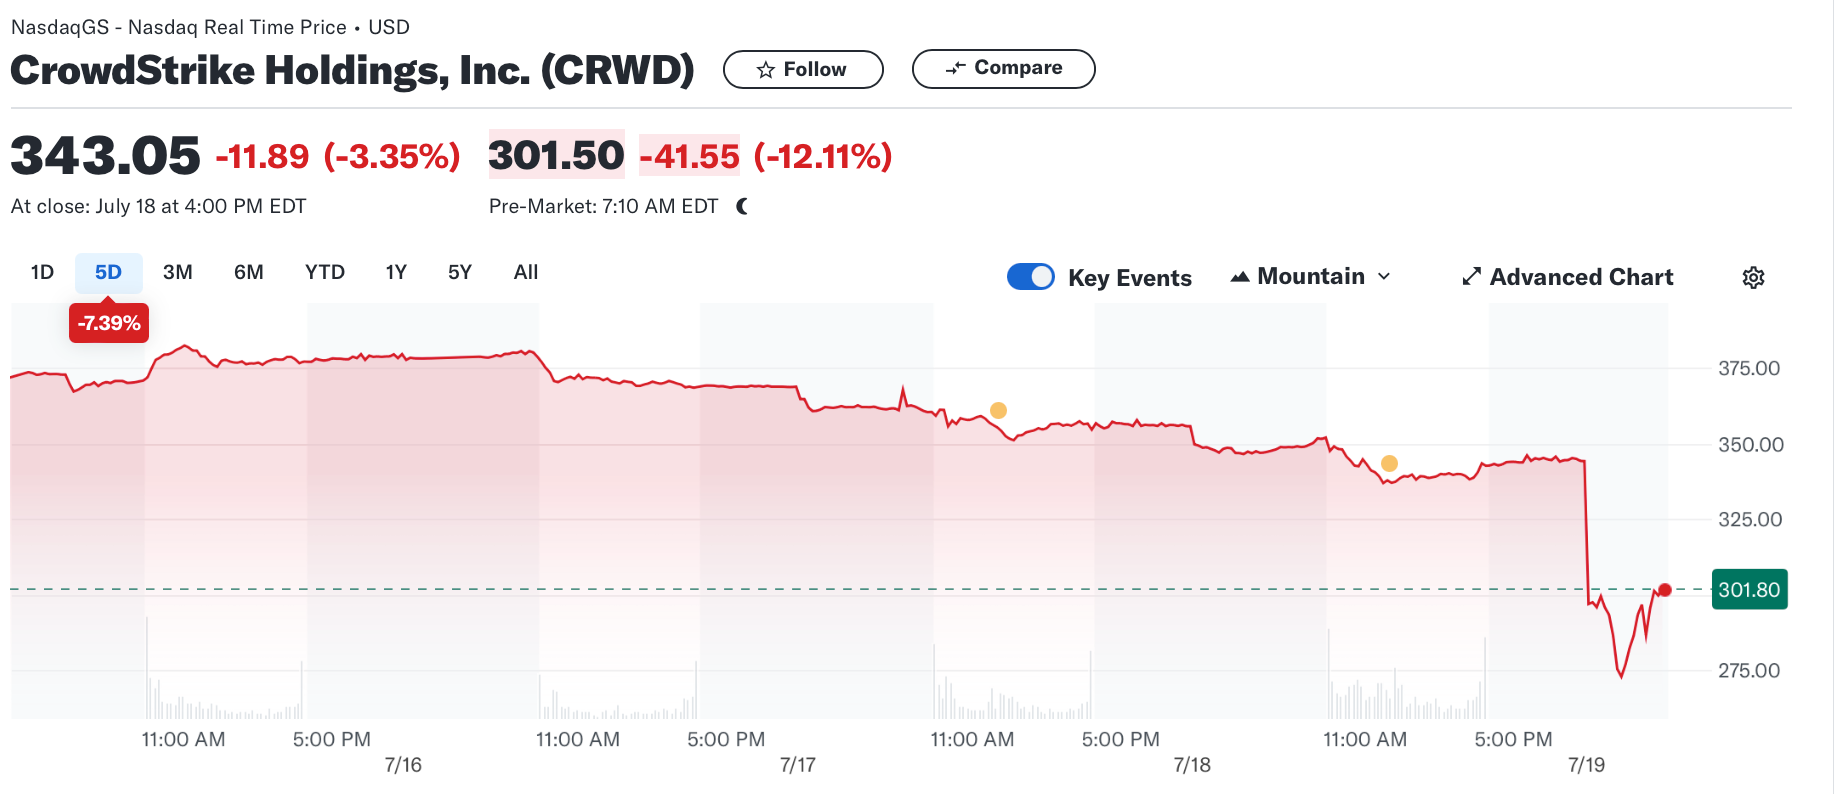 CRWD stock price goes down